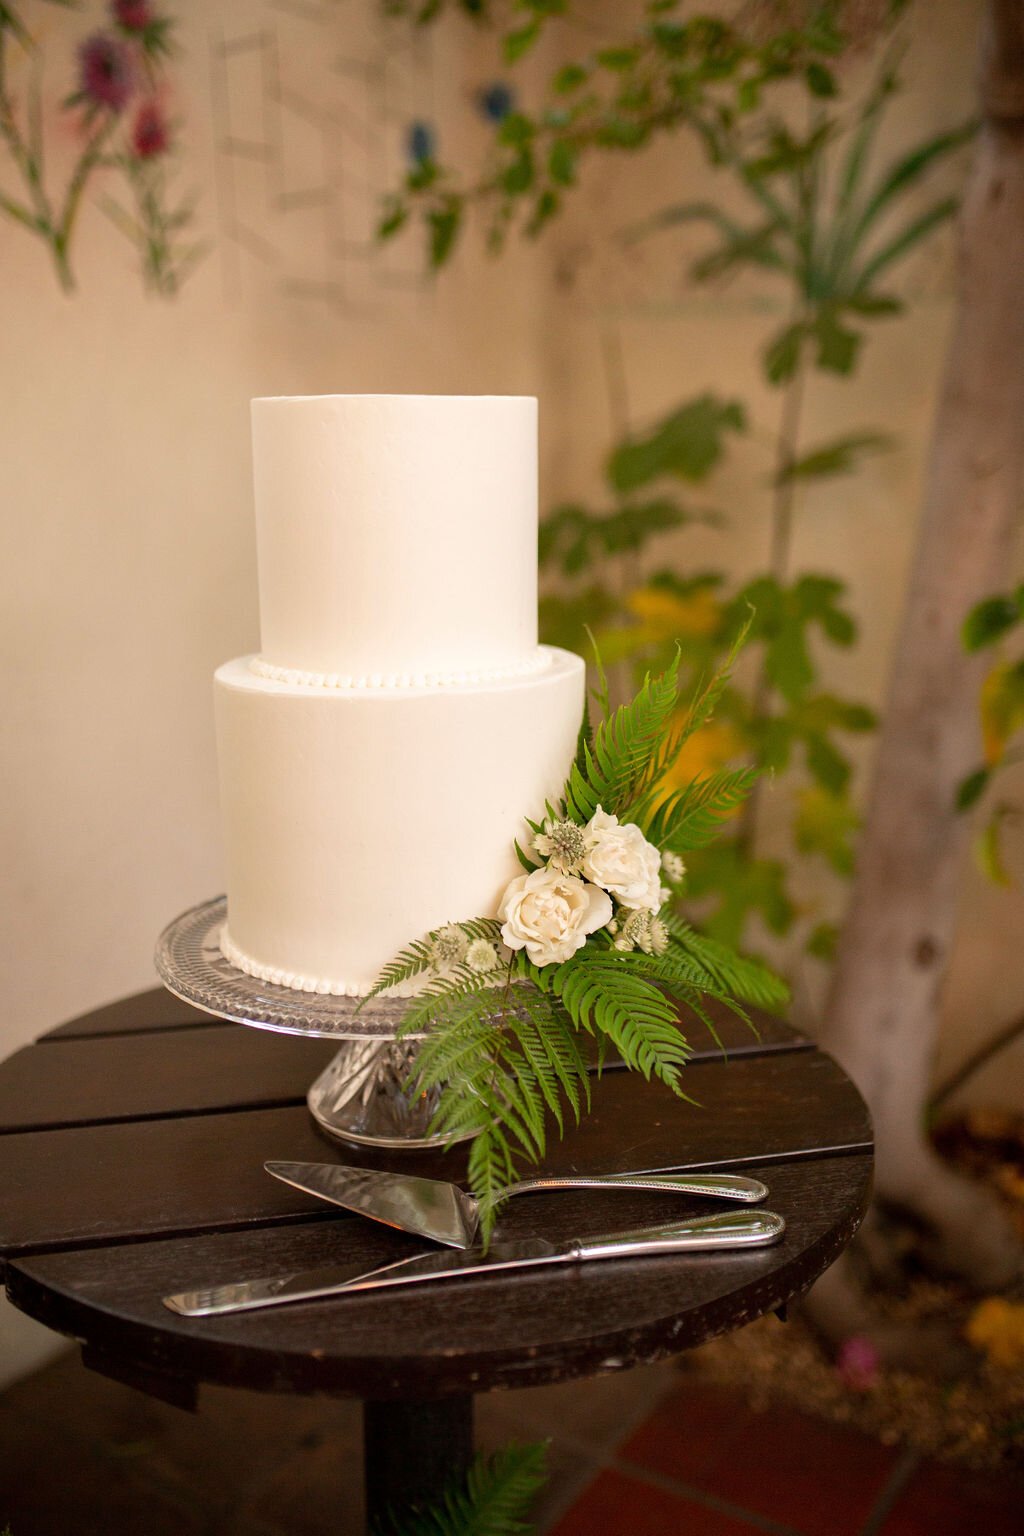 www.santabarbarawedding.com | Kristen Beinke Photography | Megan Rose Events | Loquita | Anna Le Pley Taylor | The Tent Merchant | Lele Patisserie | The Wedding Cake